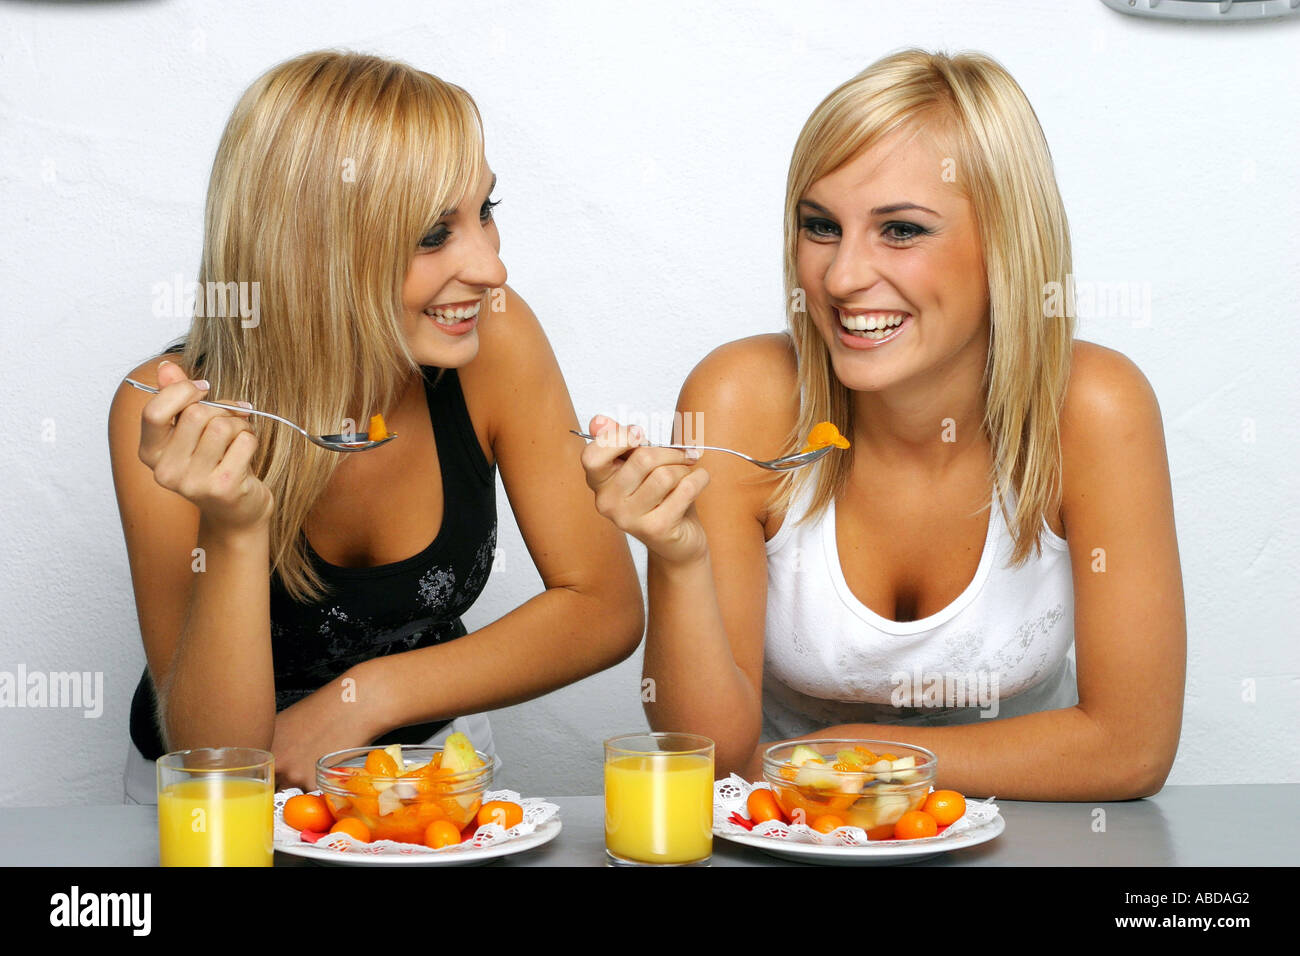 Blond twins eating fruit salad Stock Photo